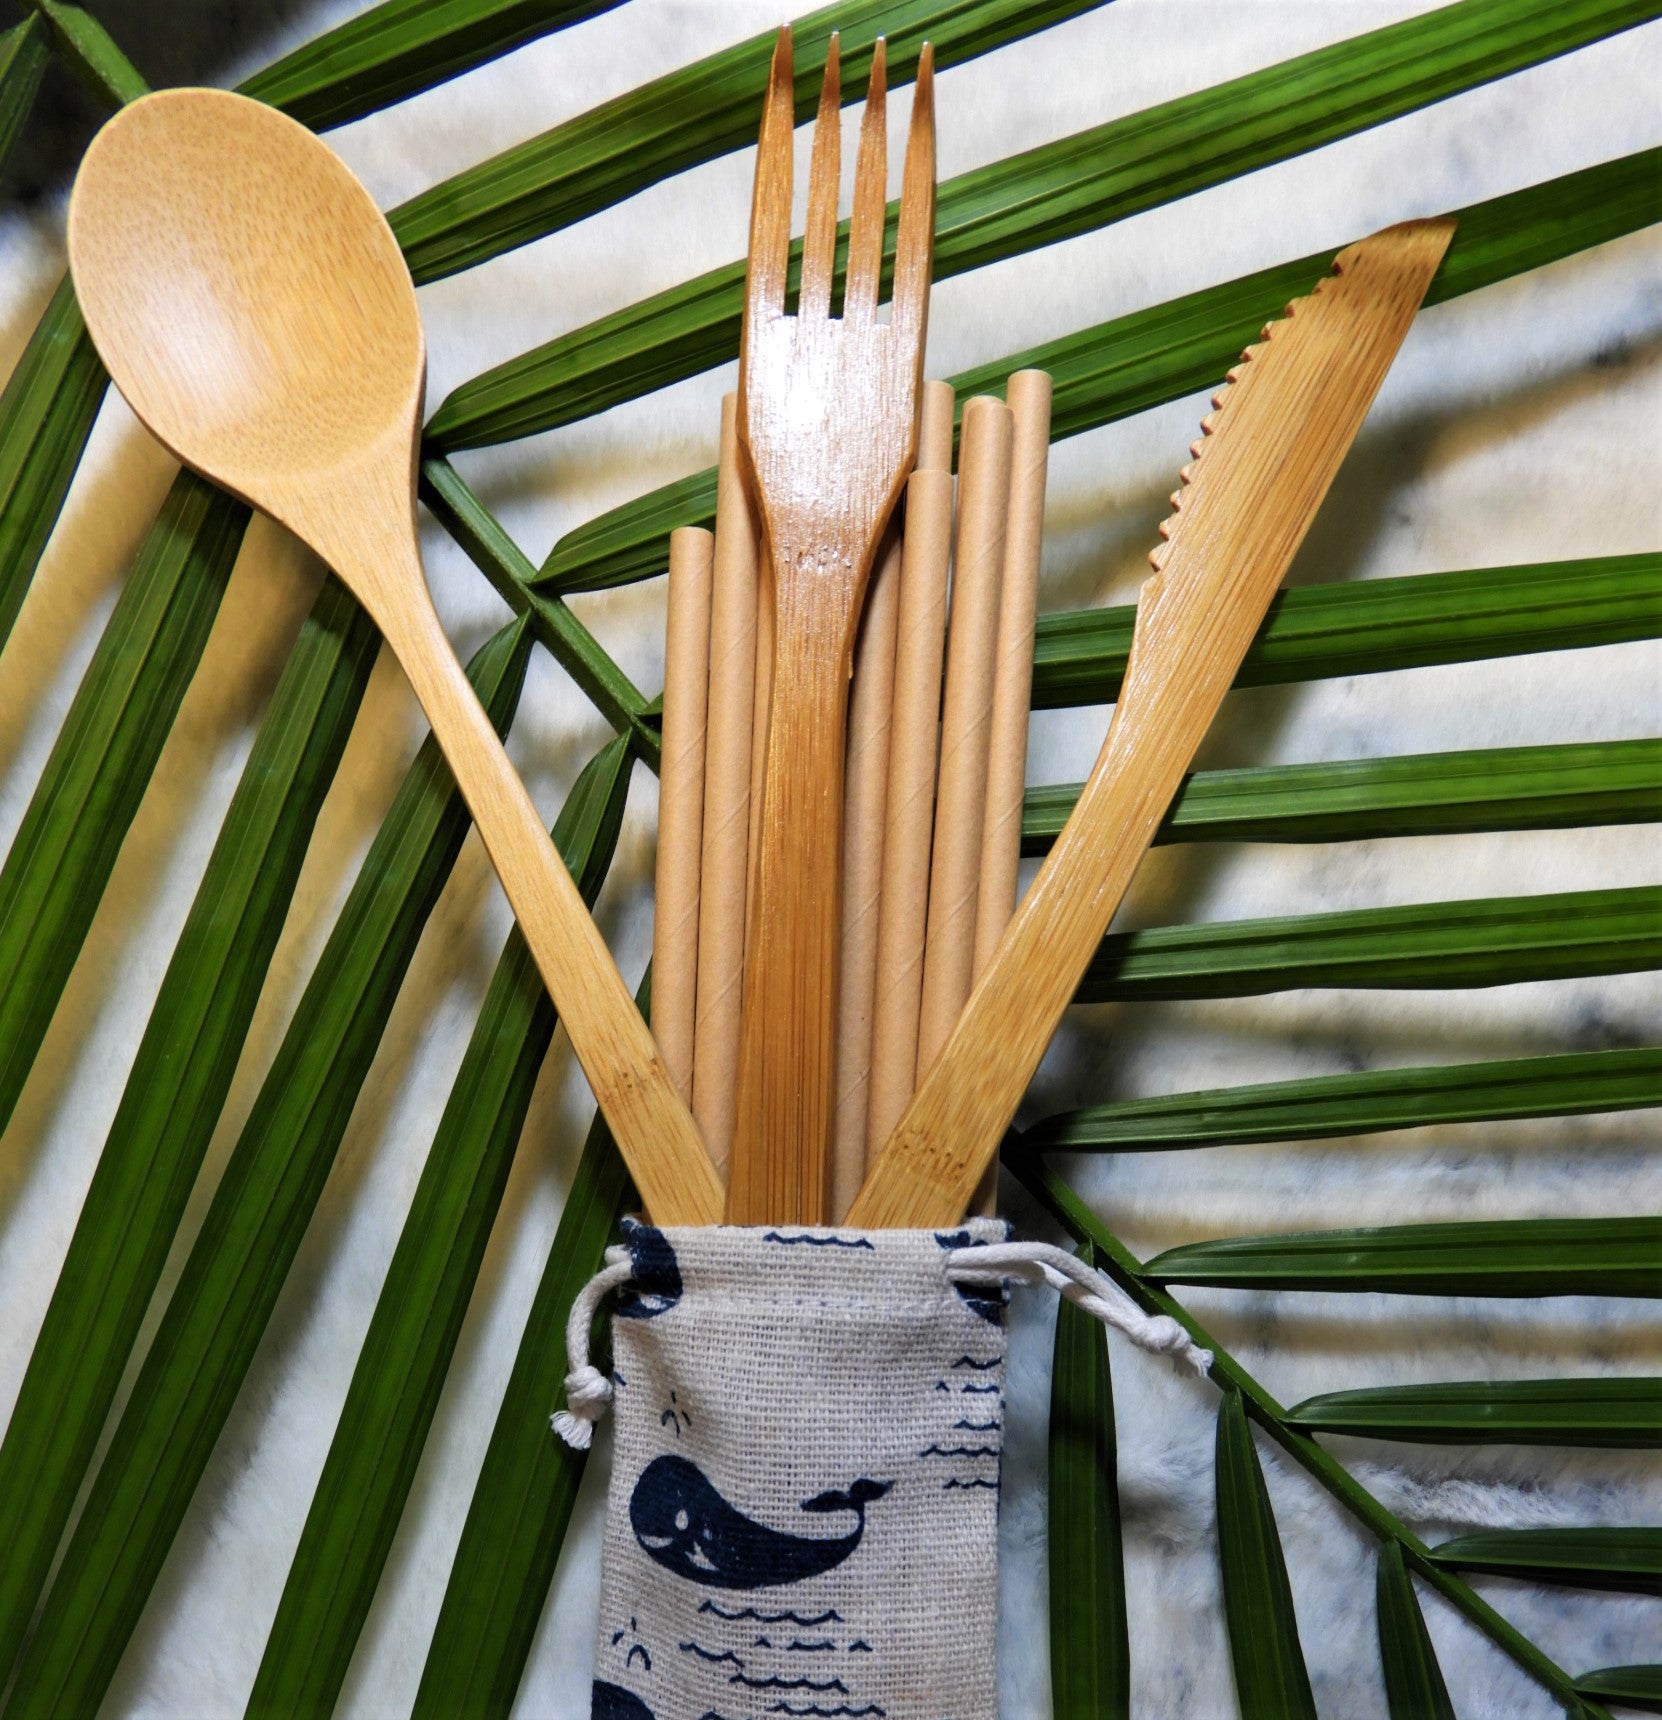 Eco-Friendly Reusable Bamboo Cutlery Set - 14 pc